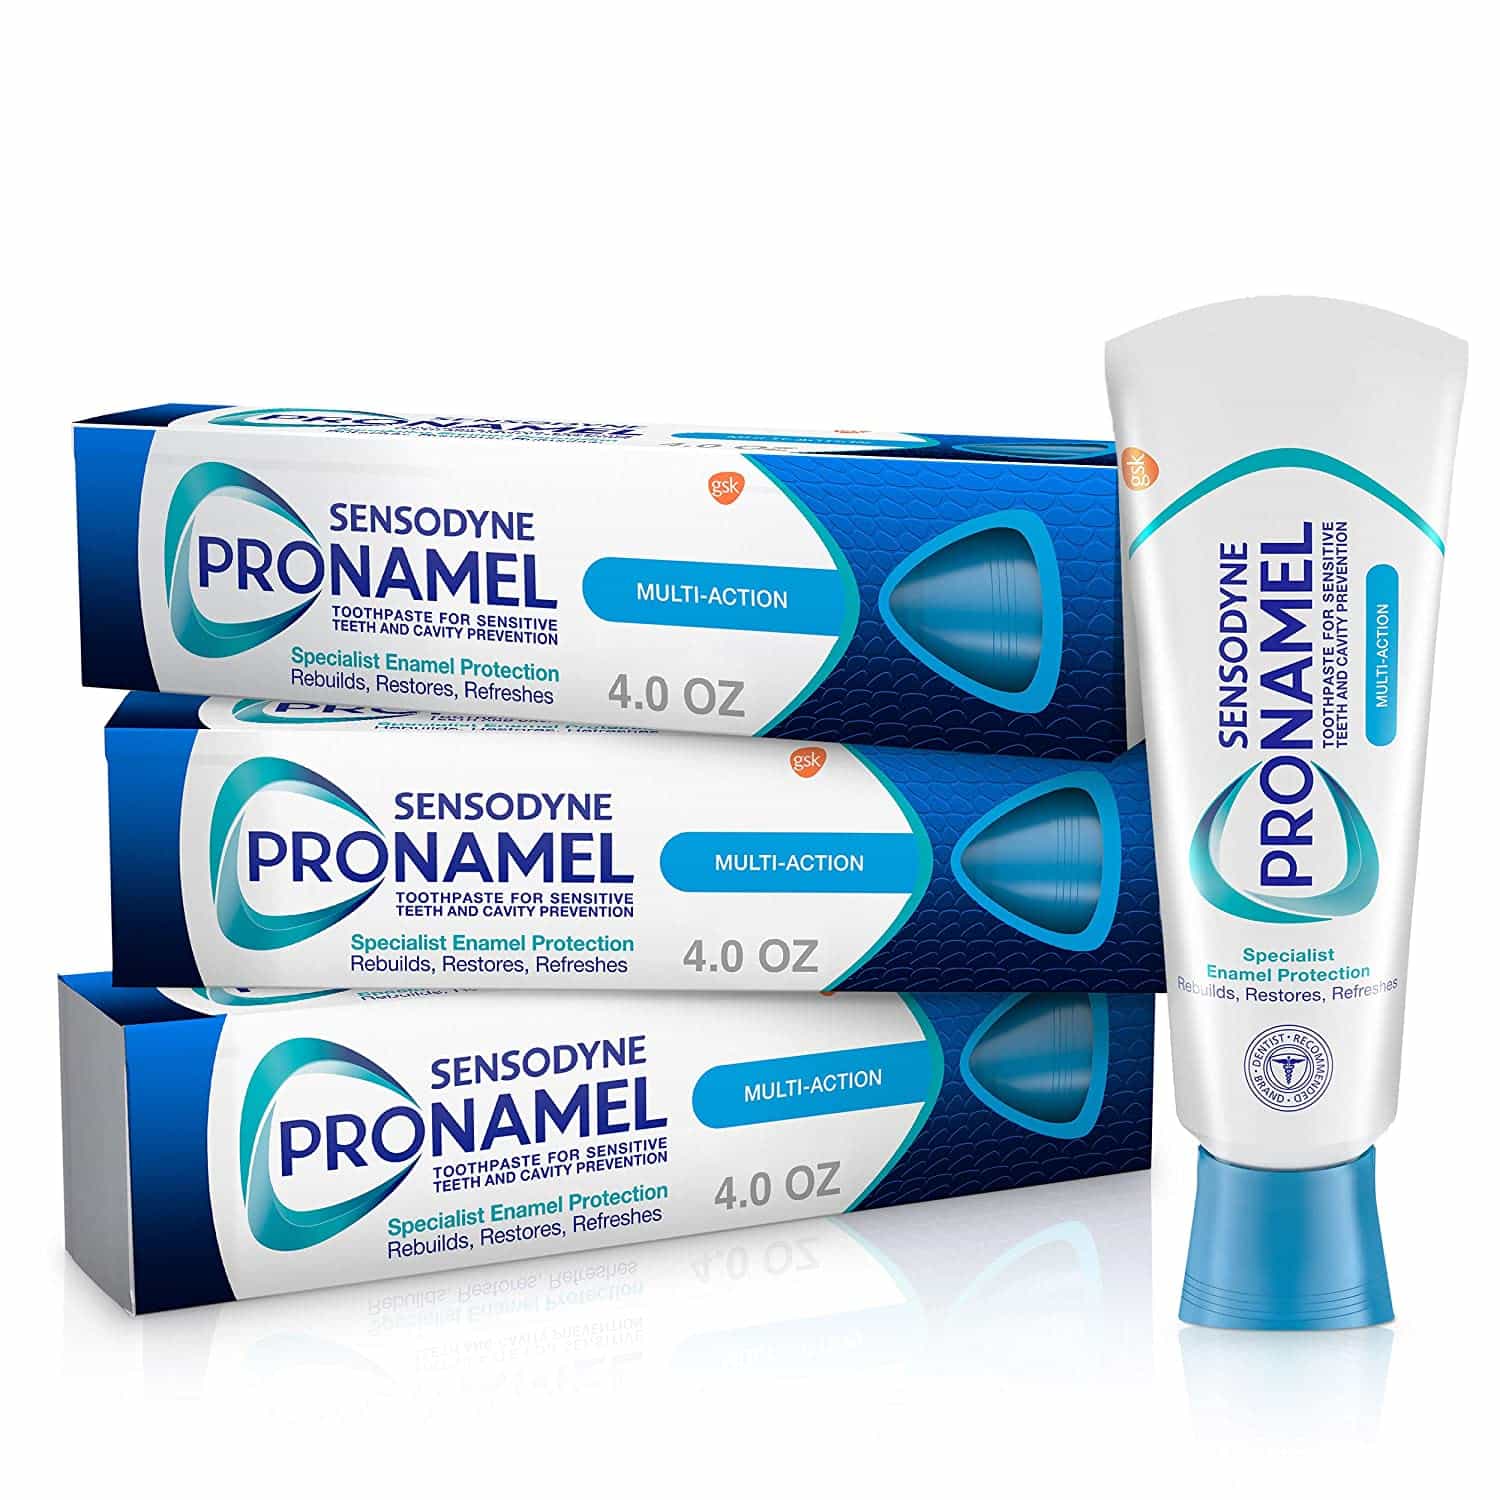 Blue tubes of Sensodyne S L S Free toothpaste